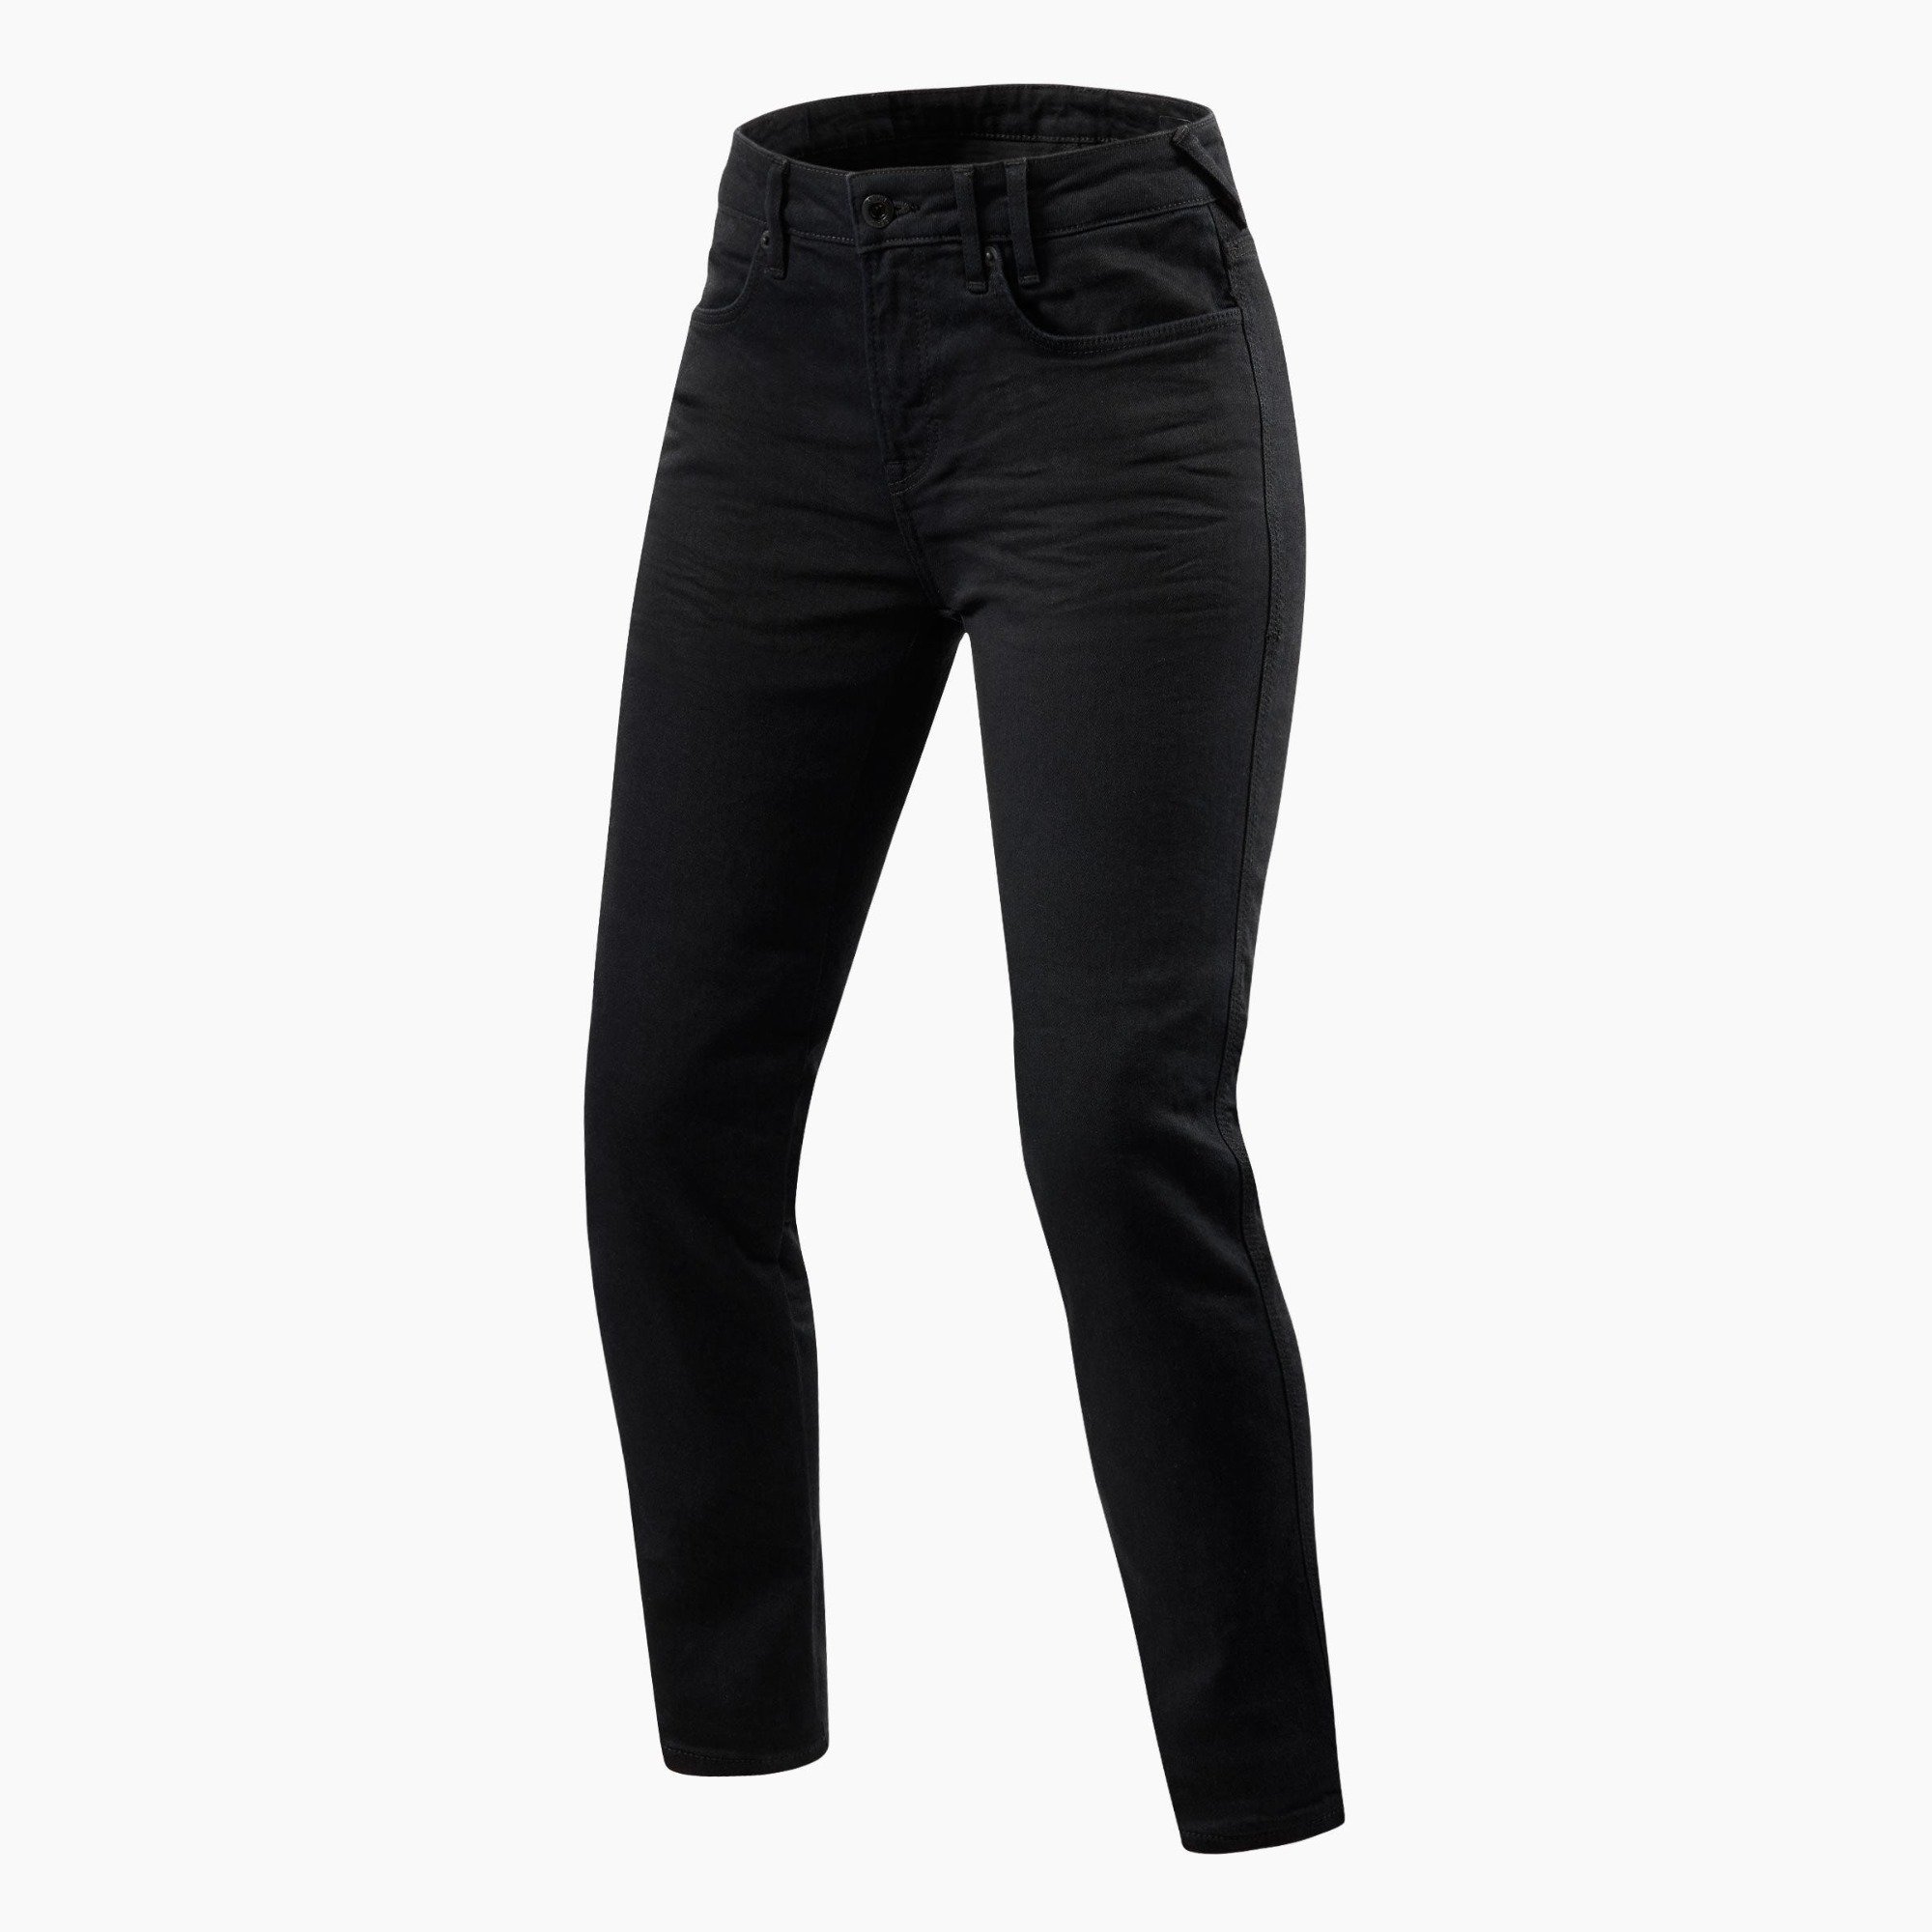 Image of REV'IT! Jeans Maple 2 Ladies SK Black Motorcycle Jeans Size L32/W36 EN